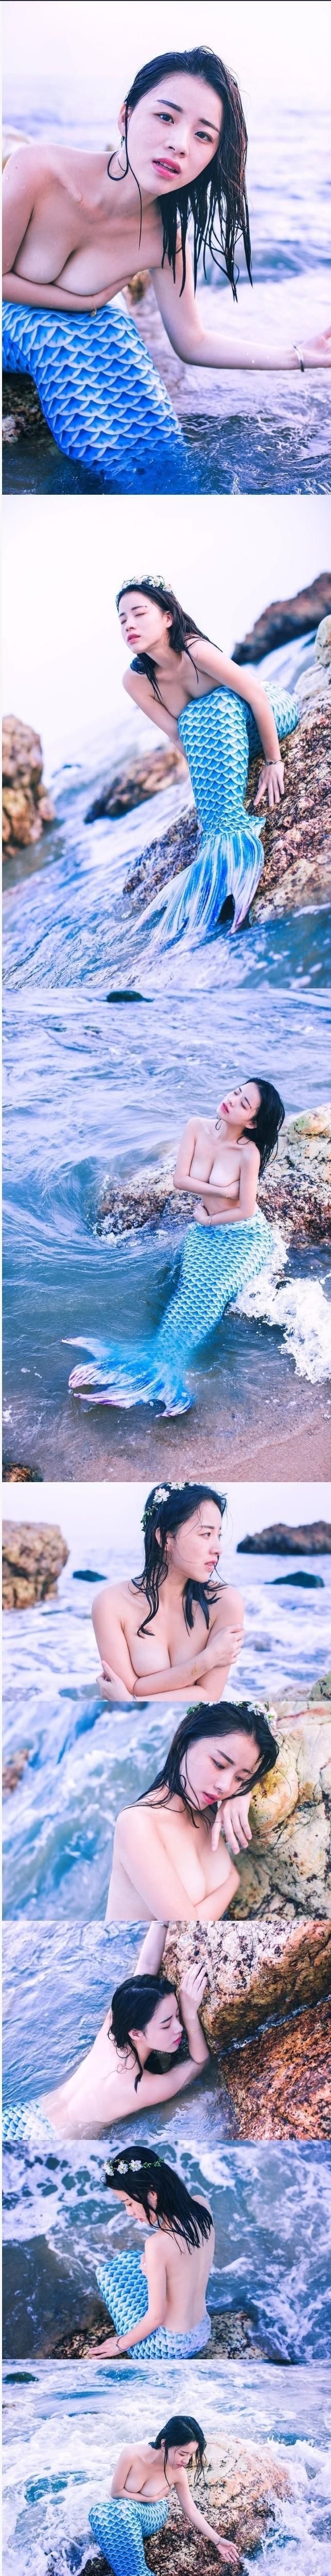 No bra mermaid. Cosplay legend